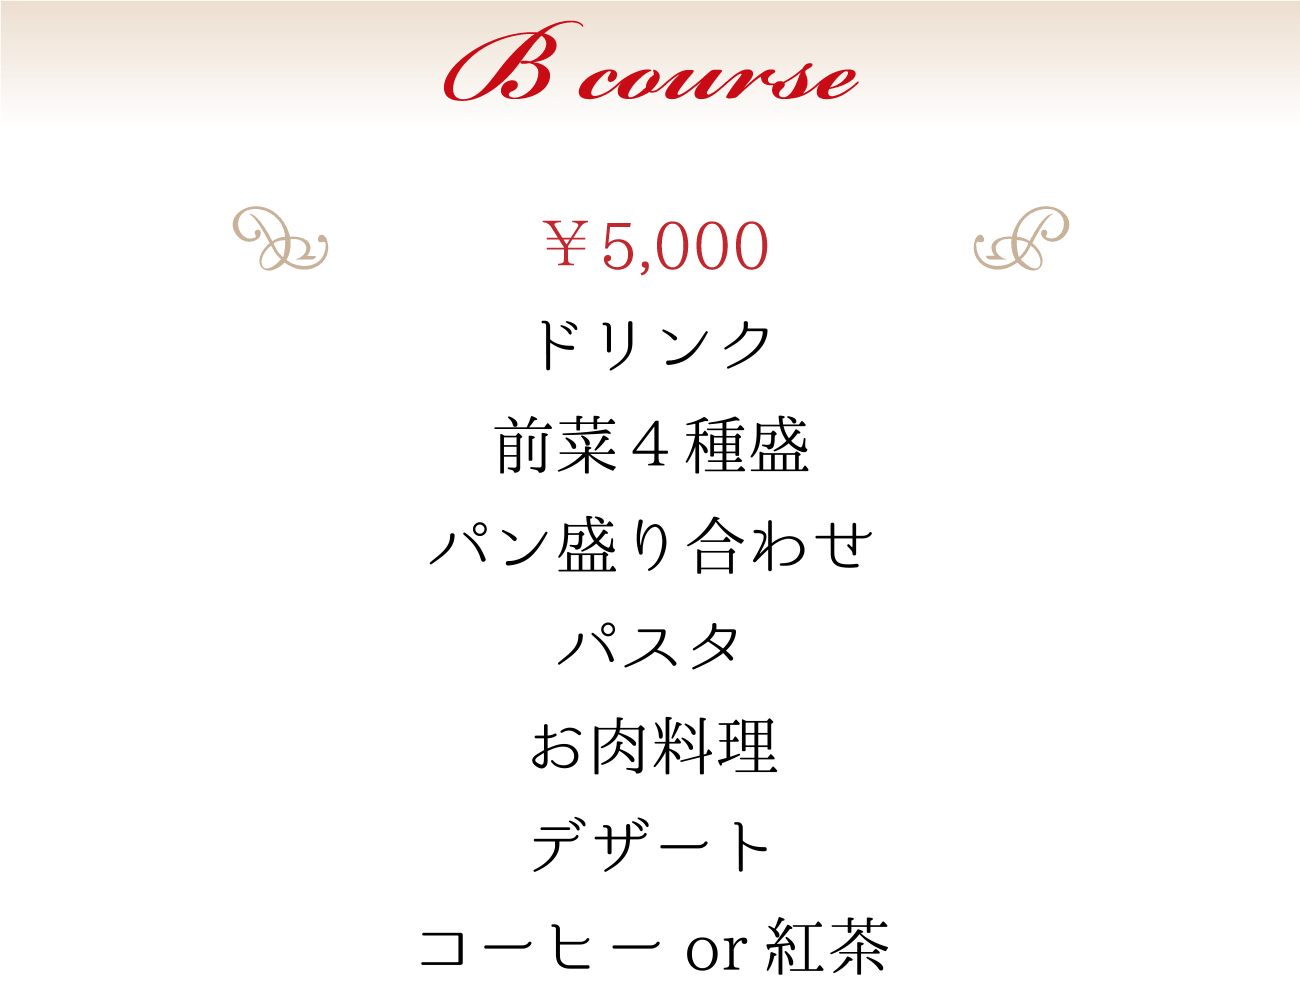 B Course